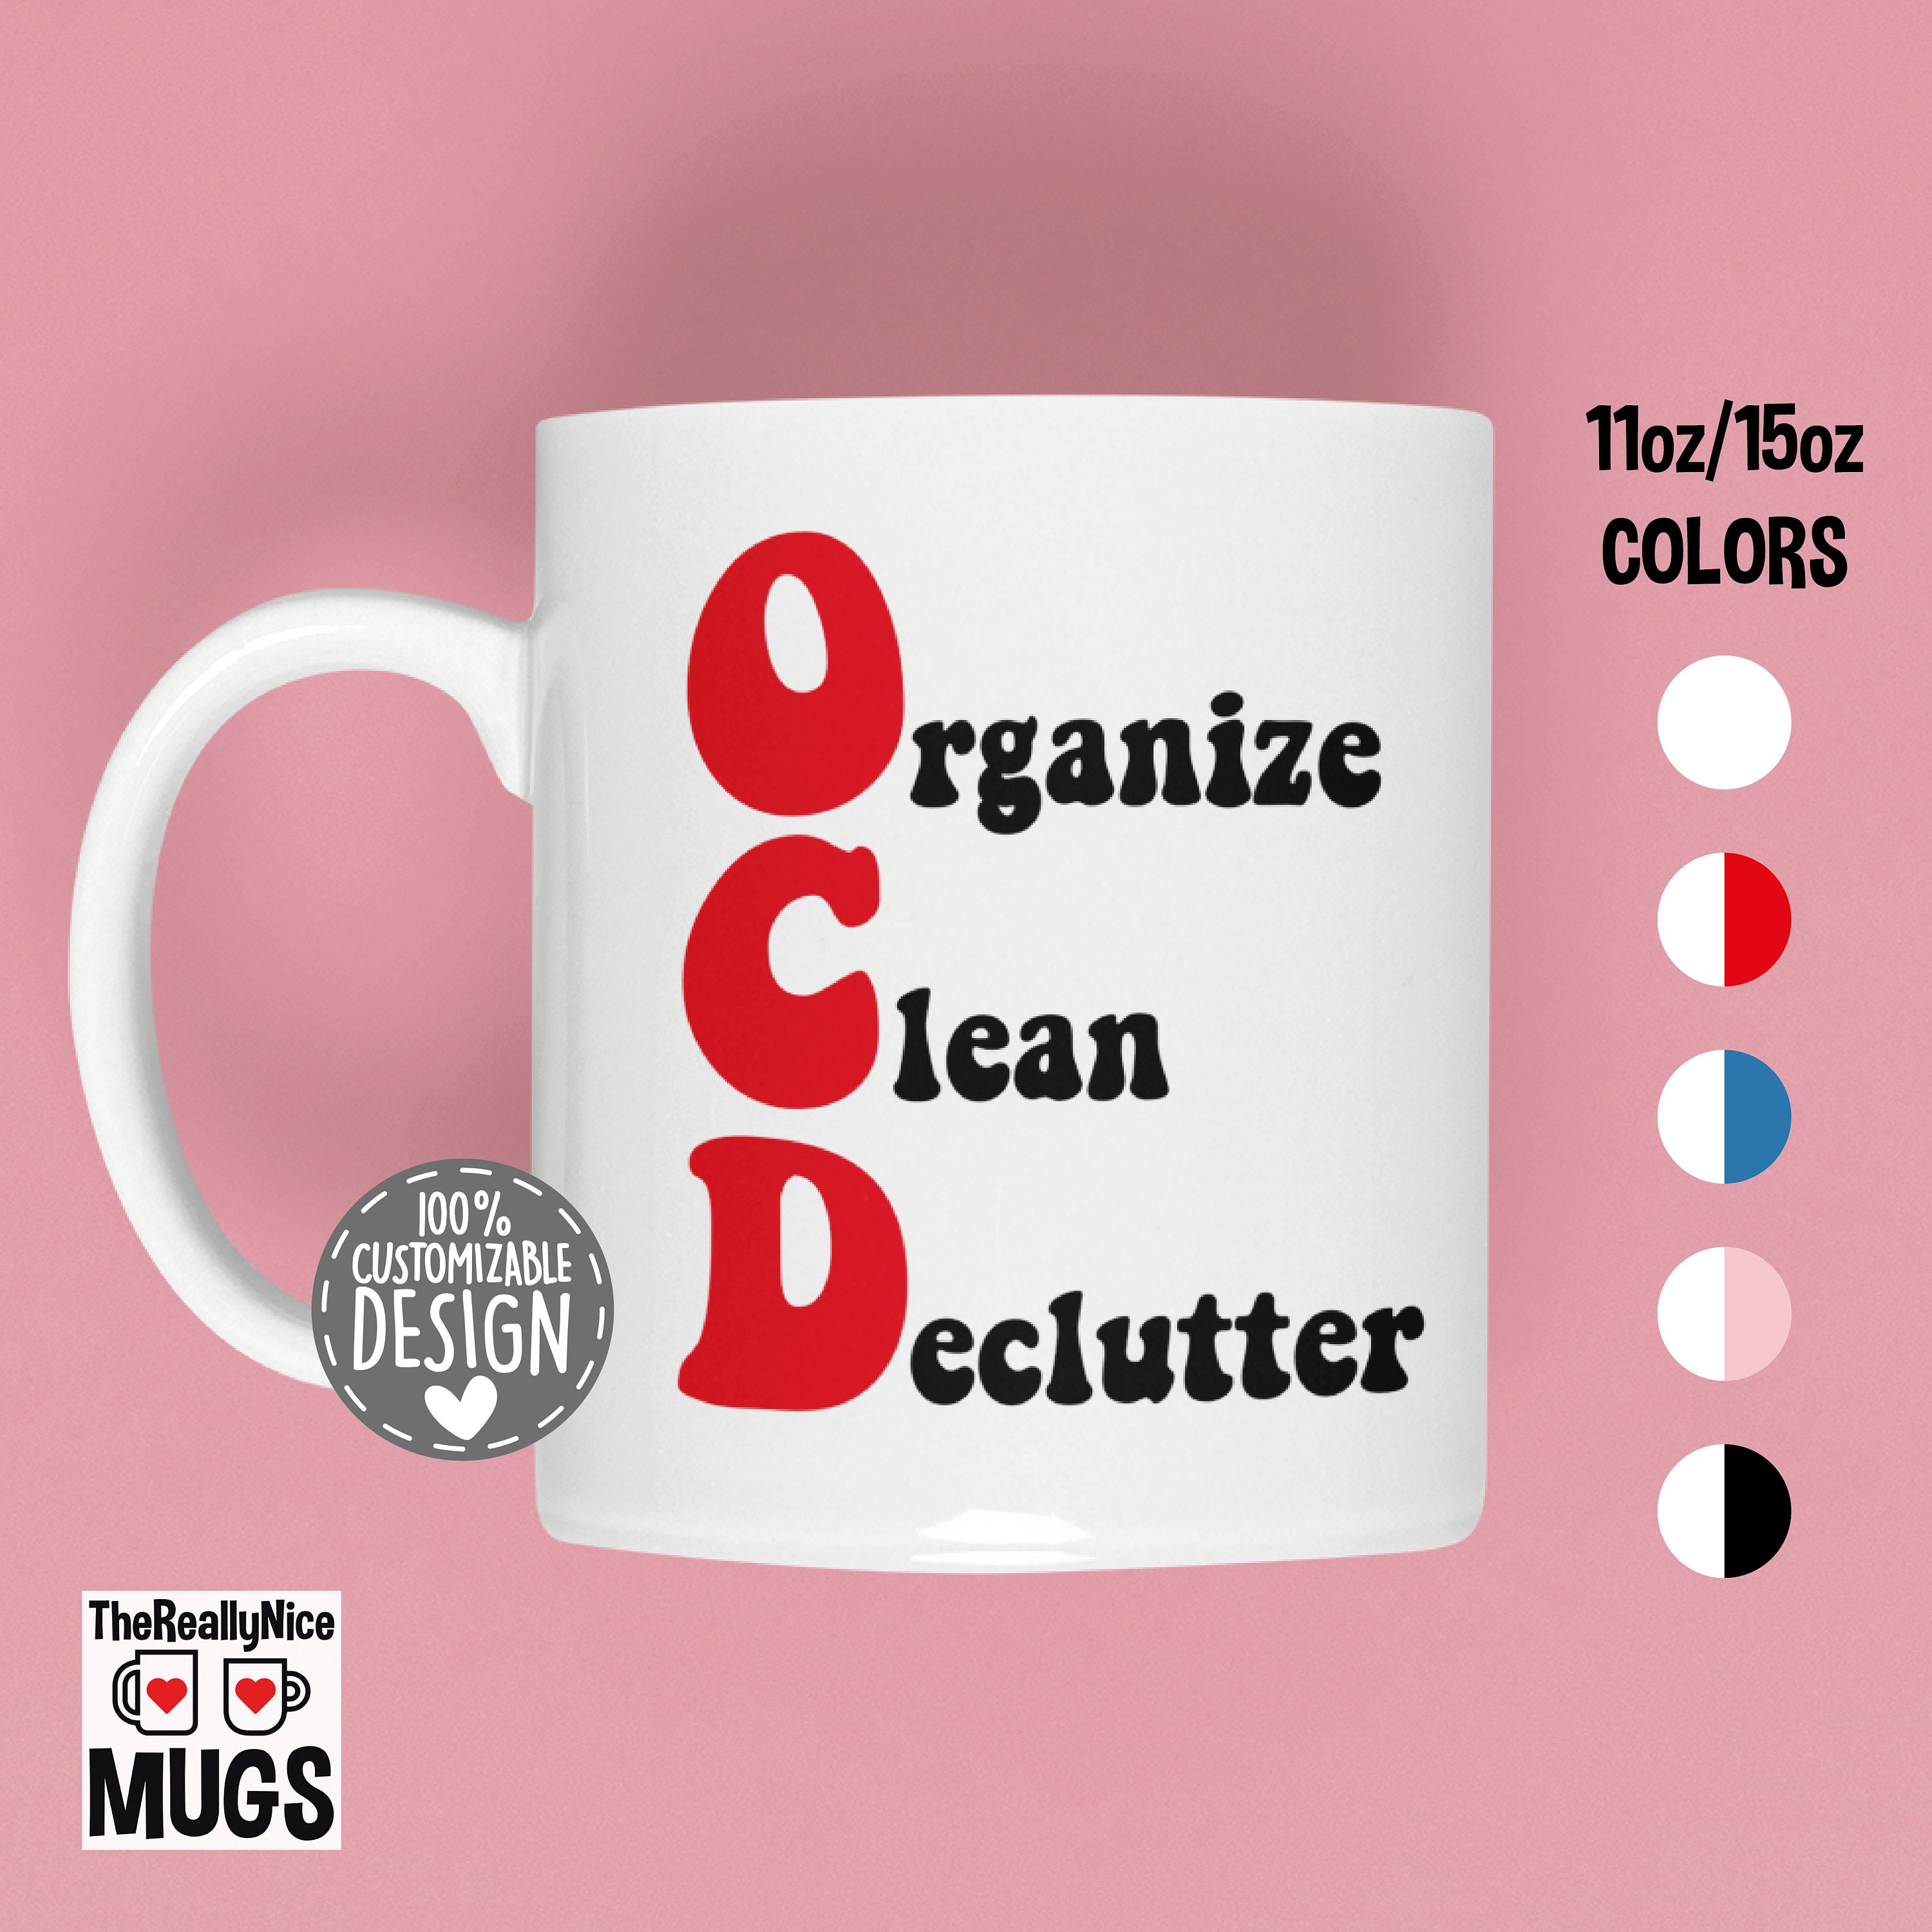 OCD Organization Cleaning Design